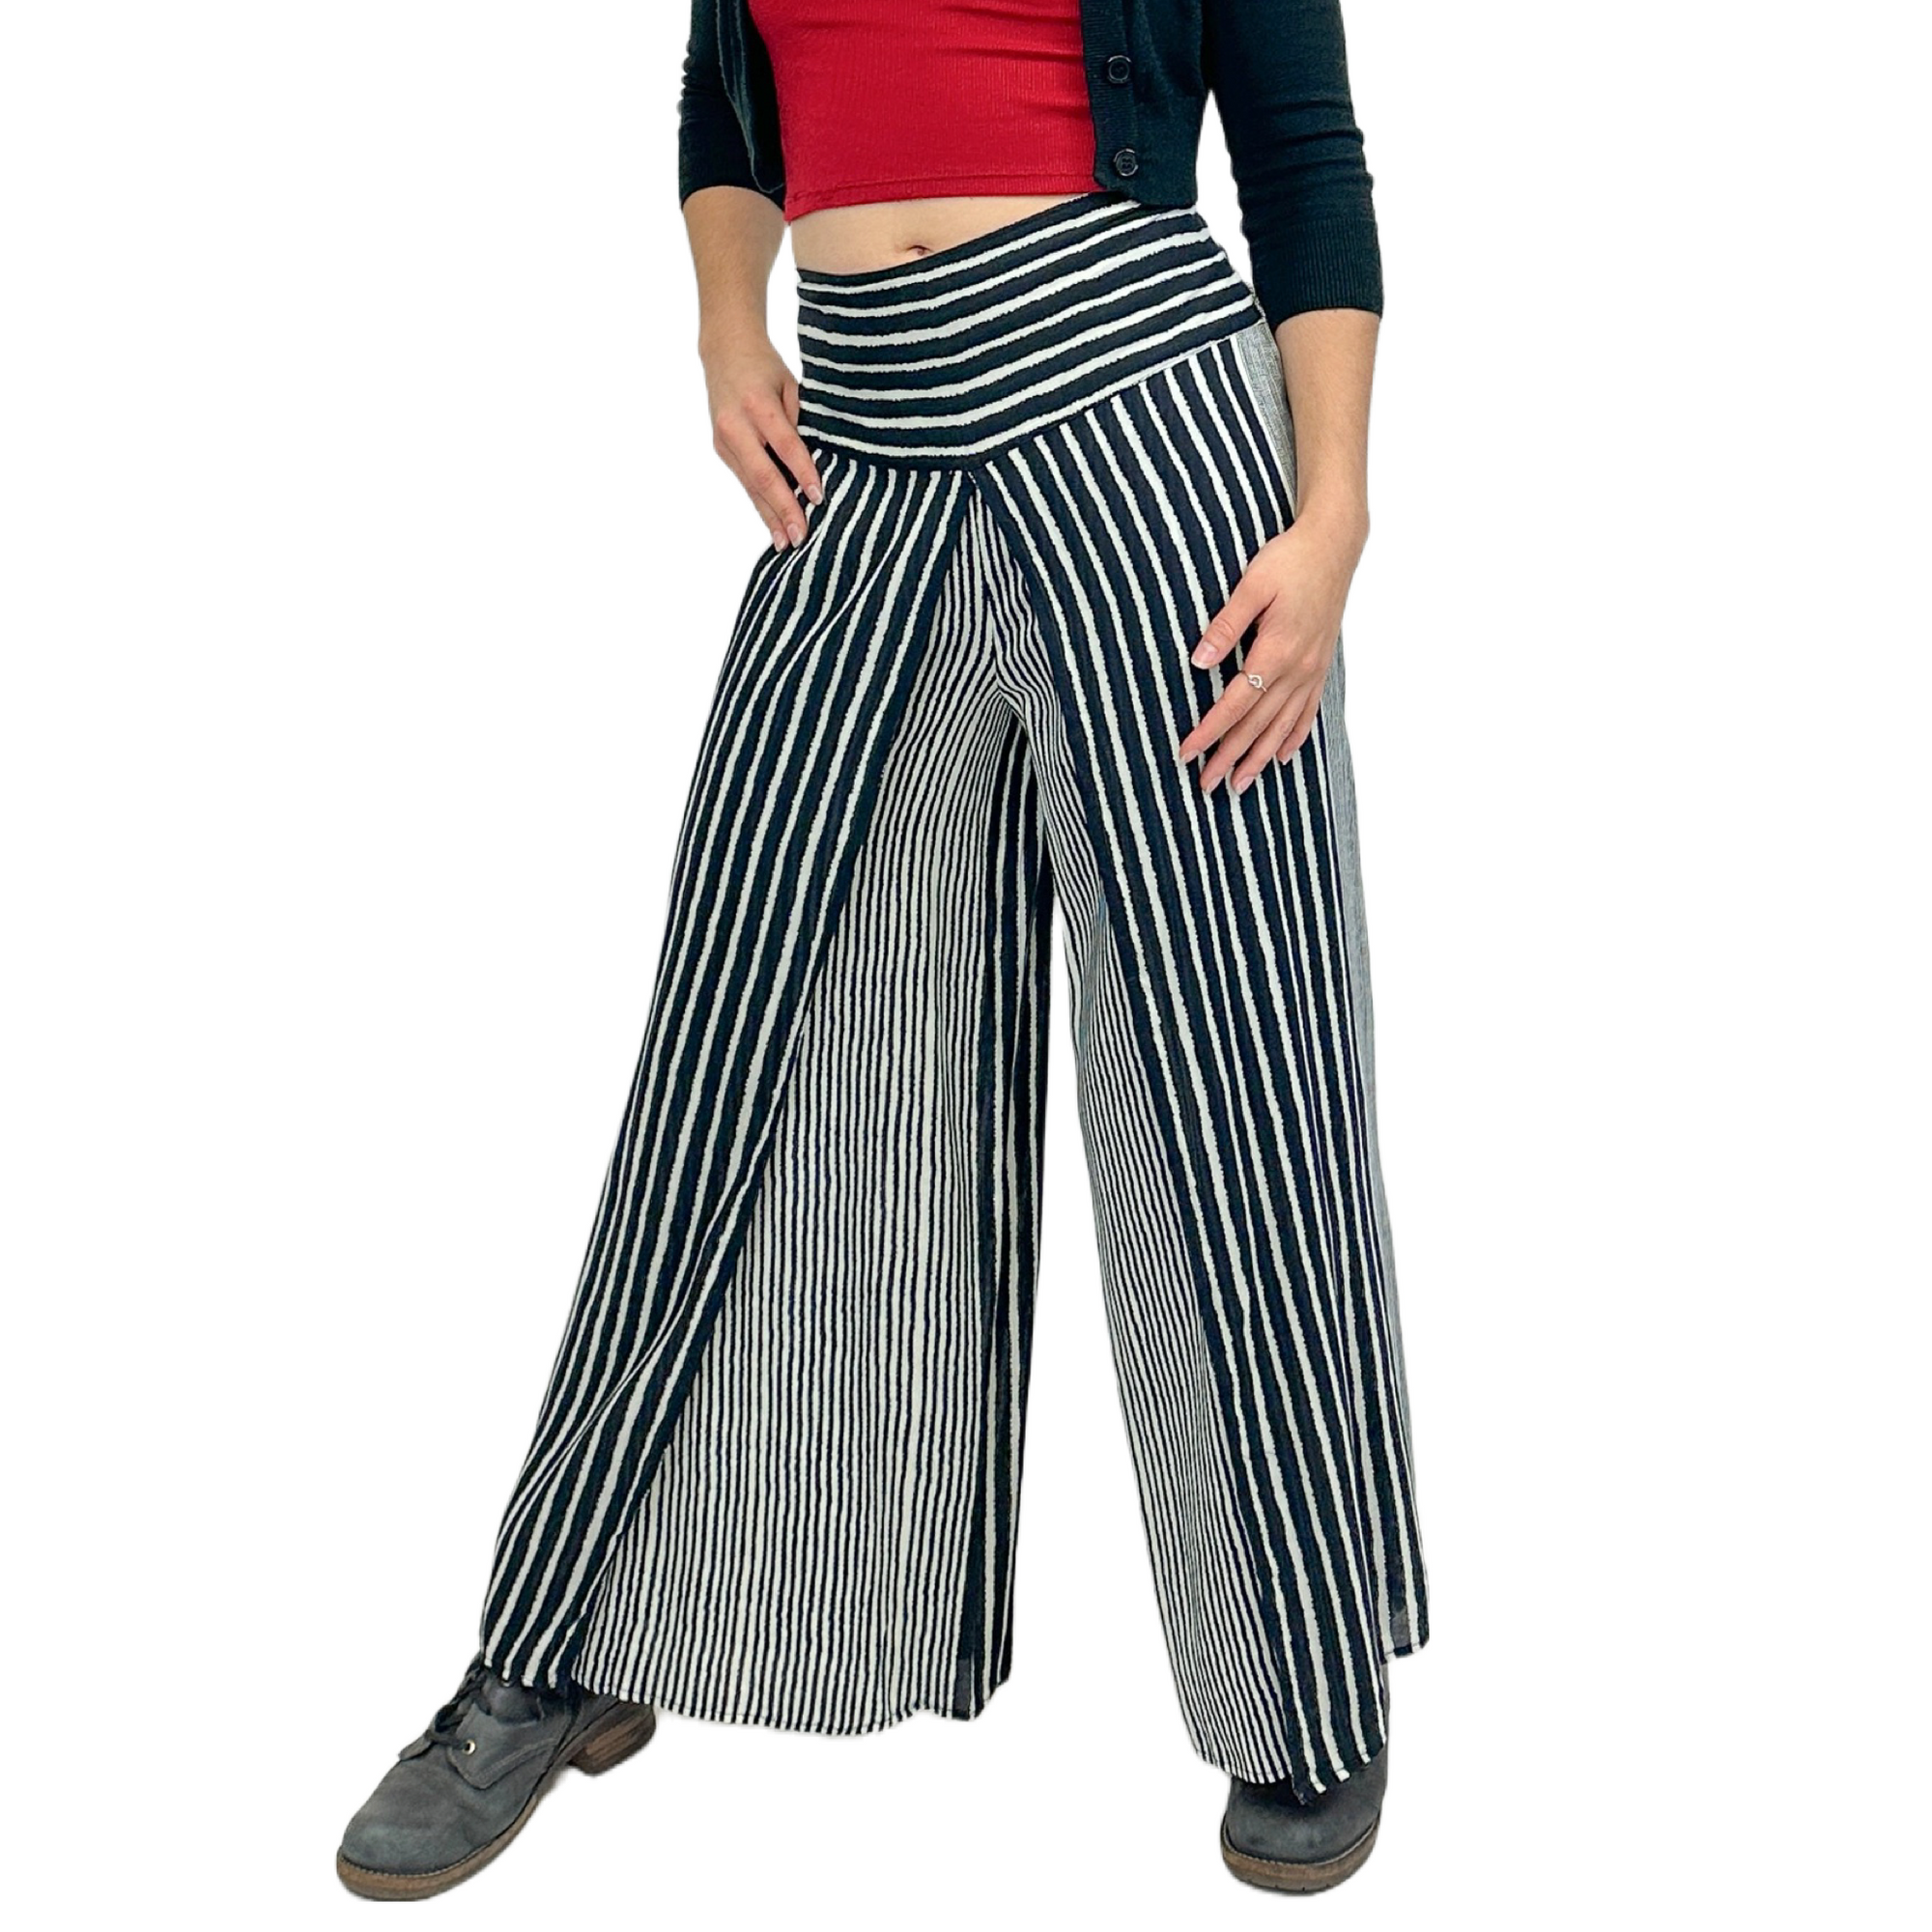 Women's Fashion Crop Top Stripe Wide-leg Pants Two-piece Set Casual Summer  | eBay